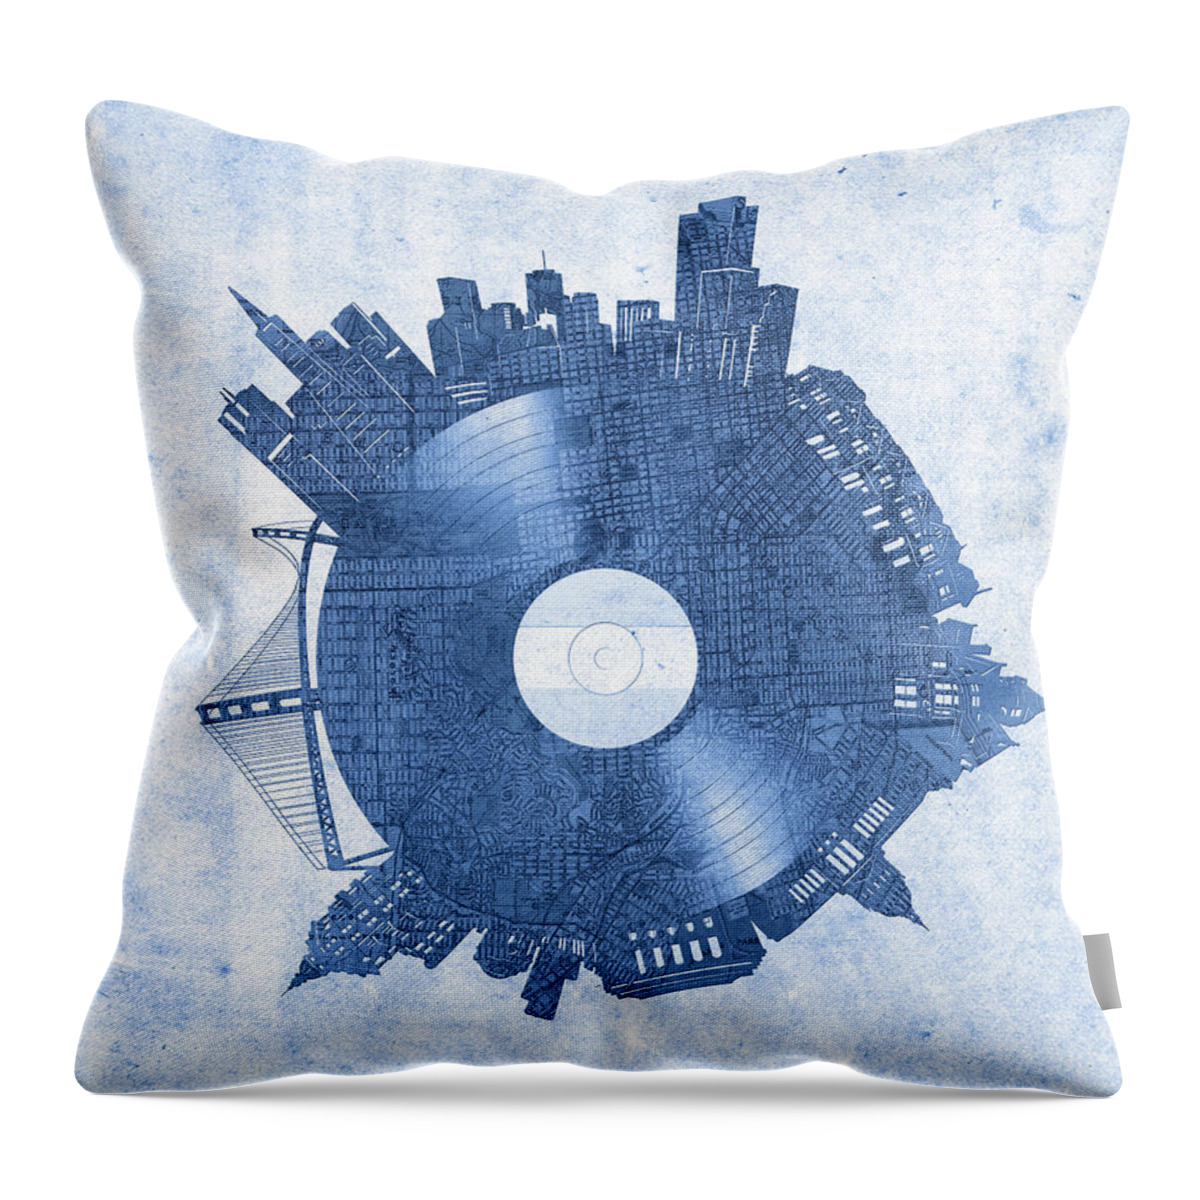 San Francisco Throw Pillow featuring the digital art San Francisco Skyline Vinyl 7 by Bekim M